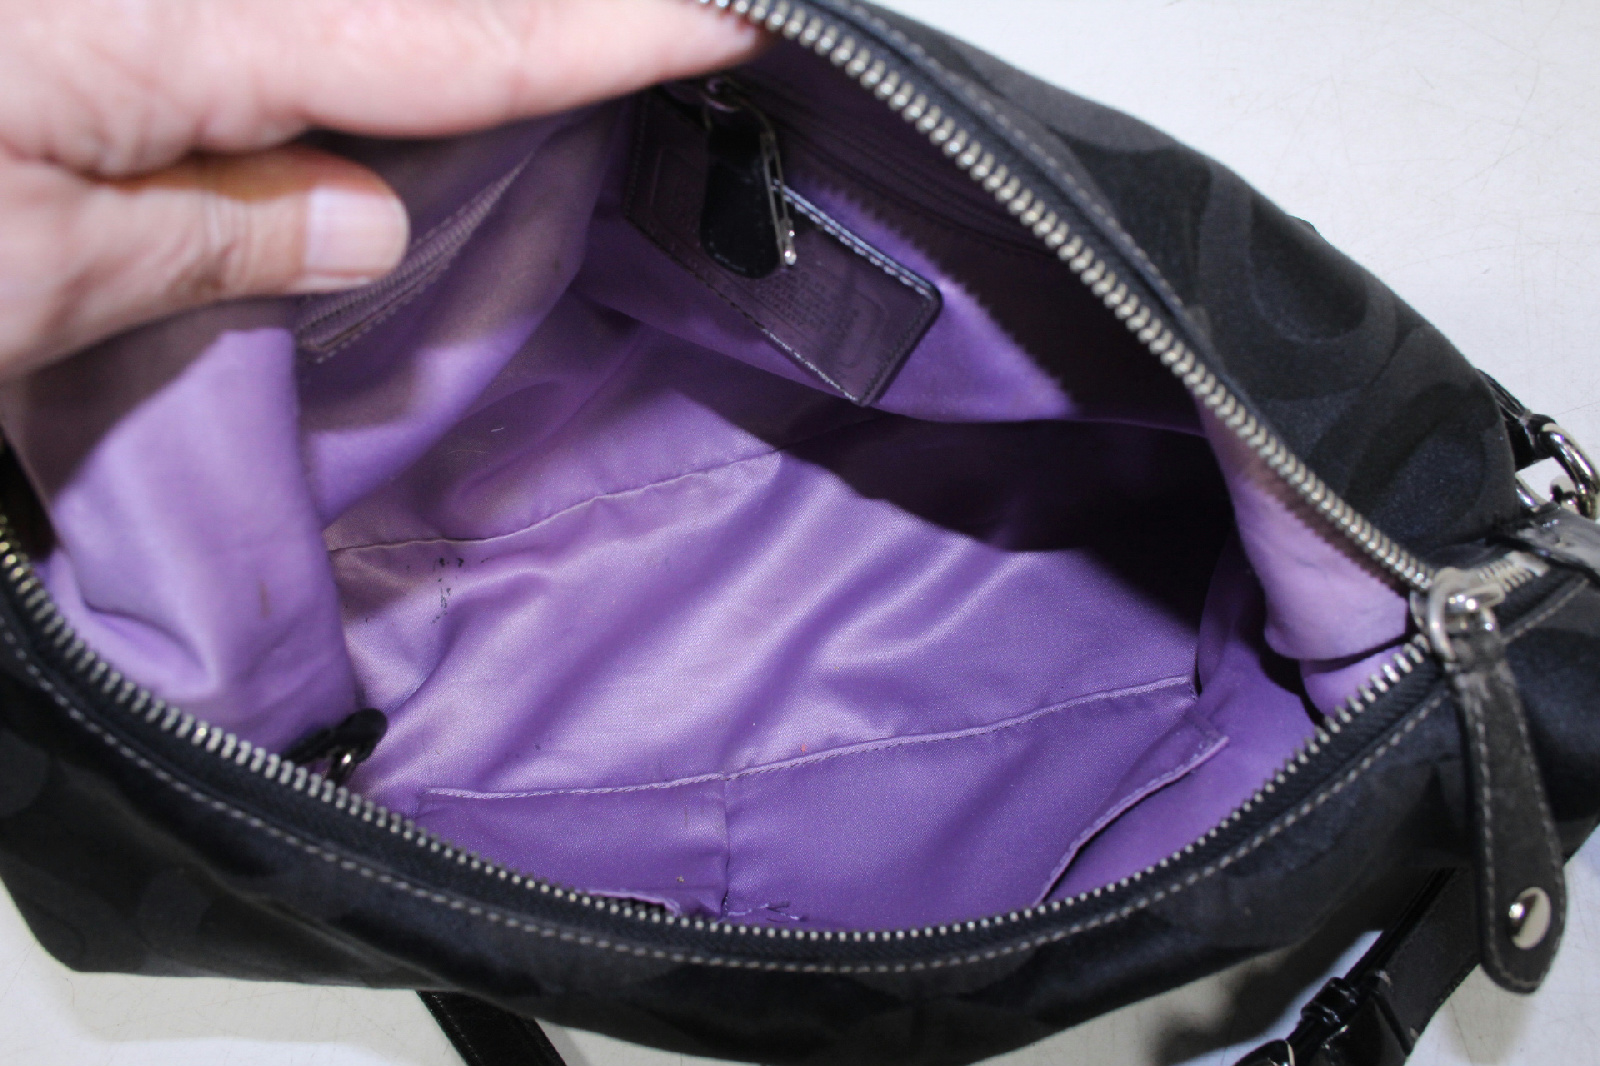 Coach Black Leather Signature Detachable Strap Shoulder Hobo Bag | eBay